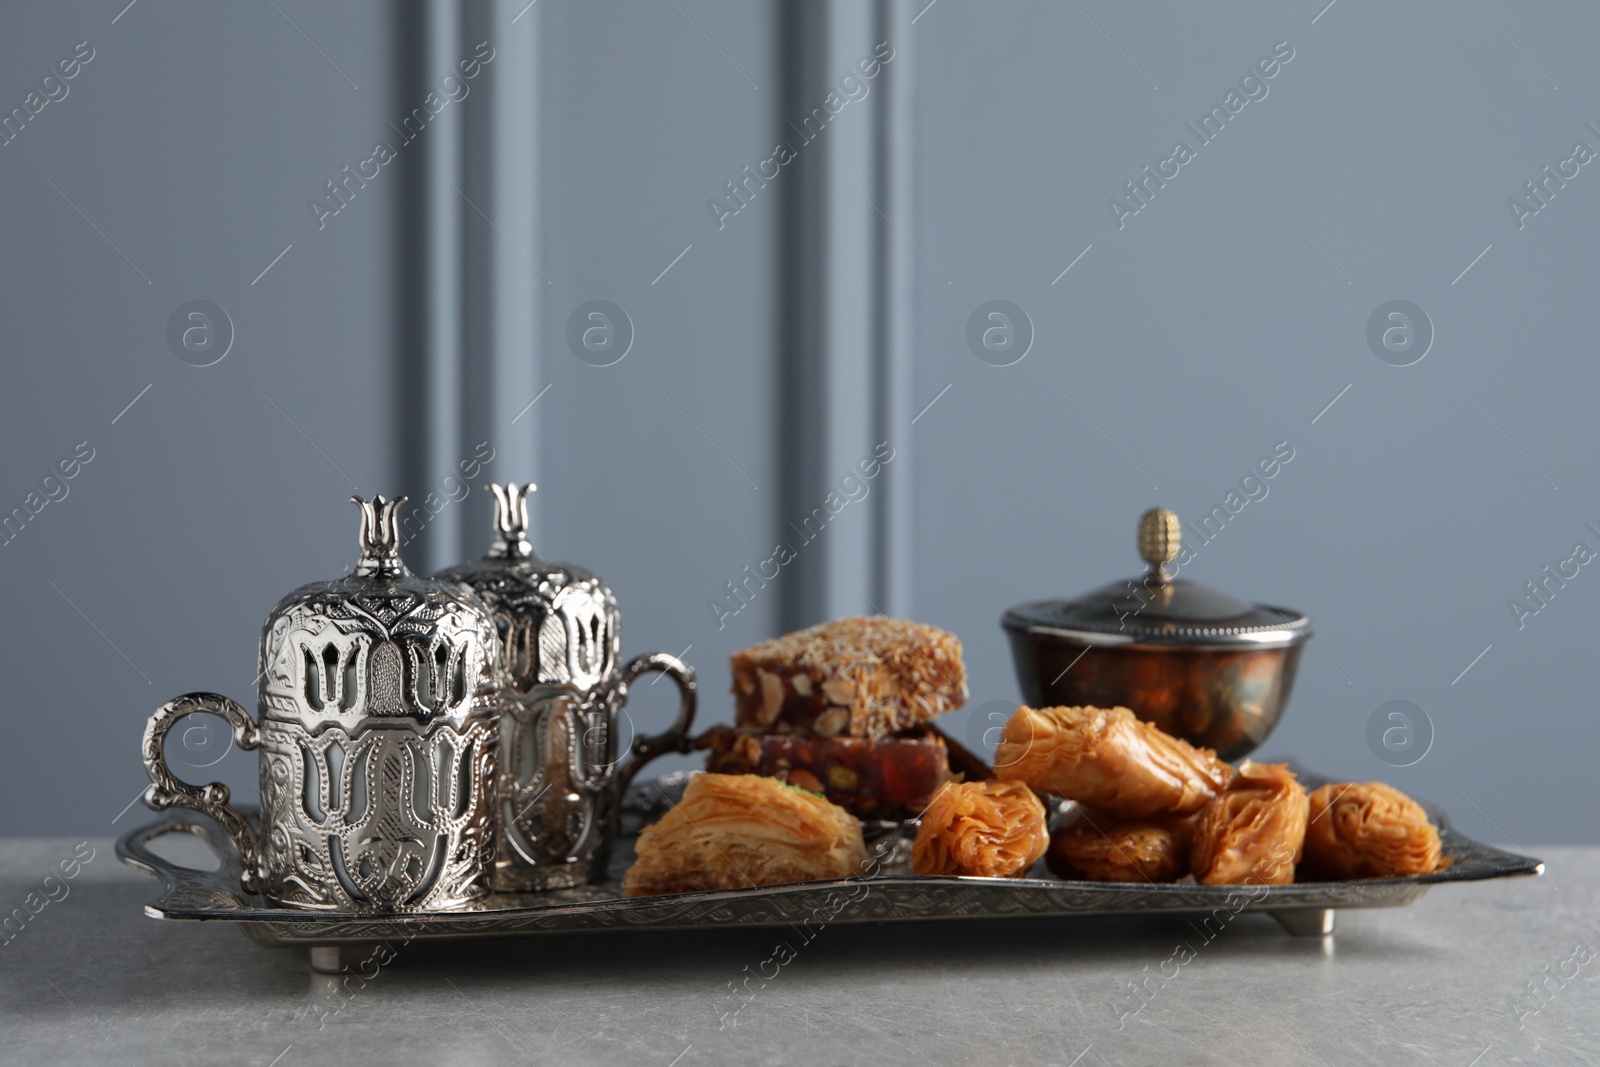 Photo of Tea, baklava dessert and Turkish delight served in vintage tea set on grey textured table